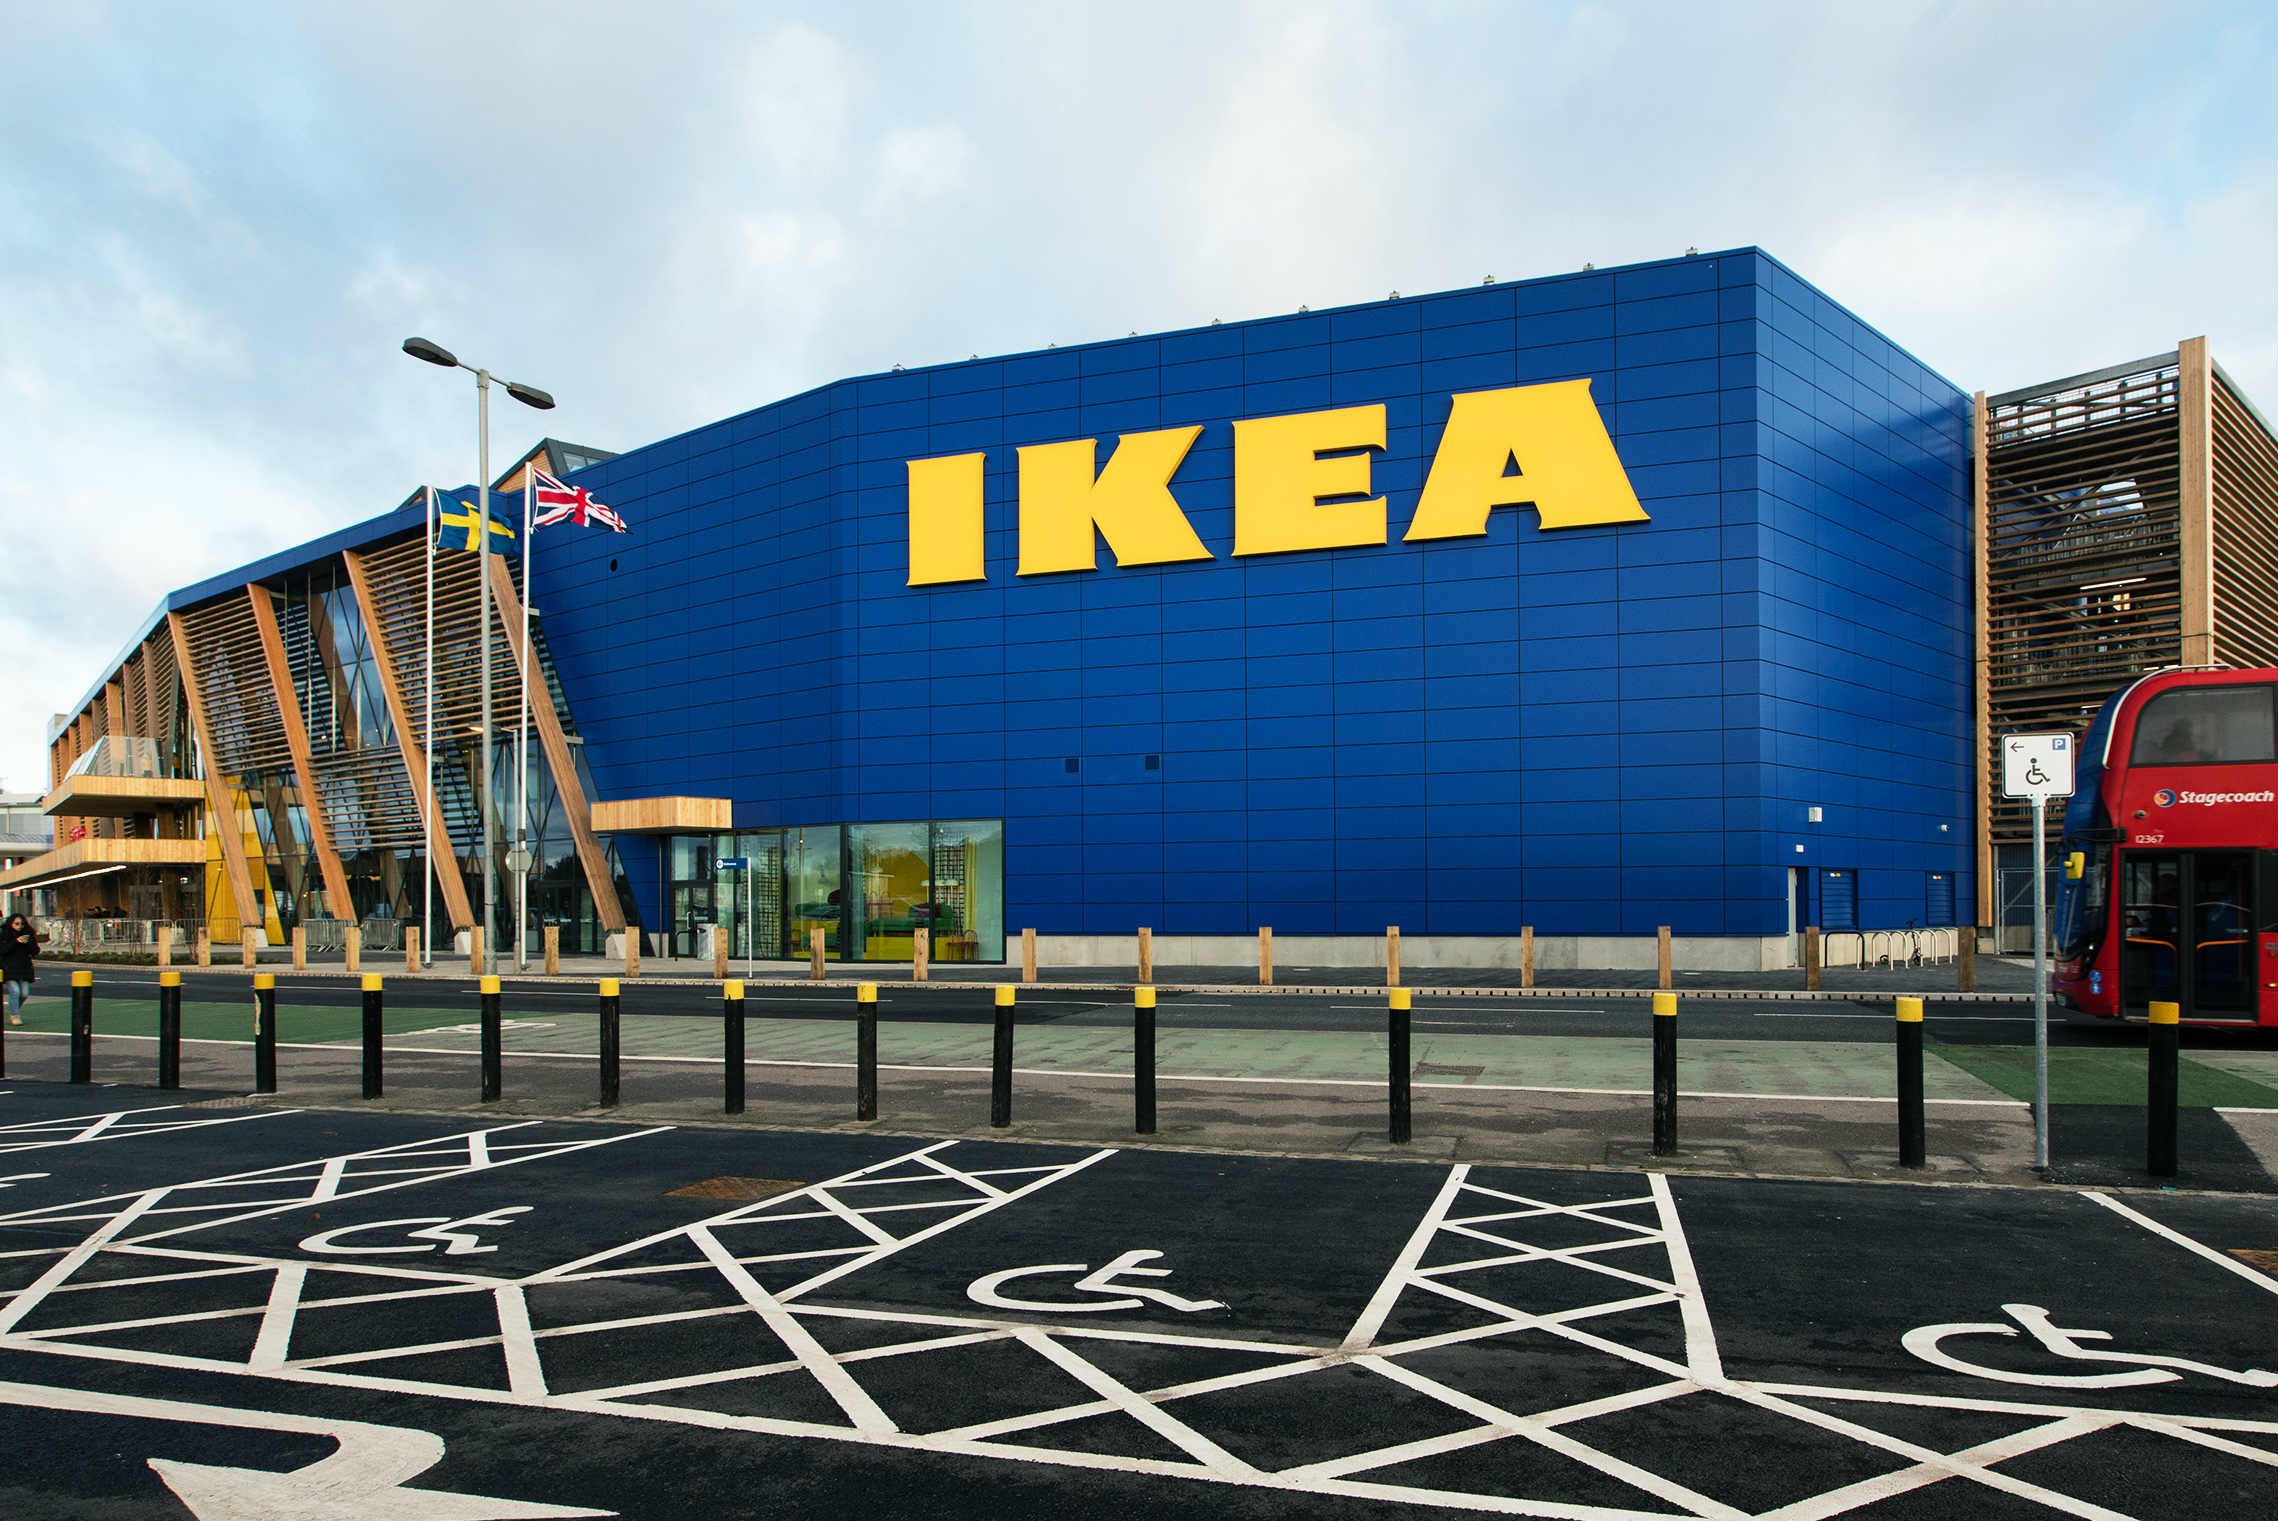 IKEA 攻略 | 宜家全国商场分布及详细地址 - 买错了